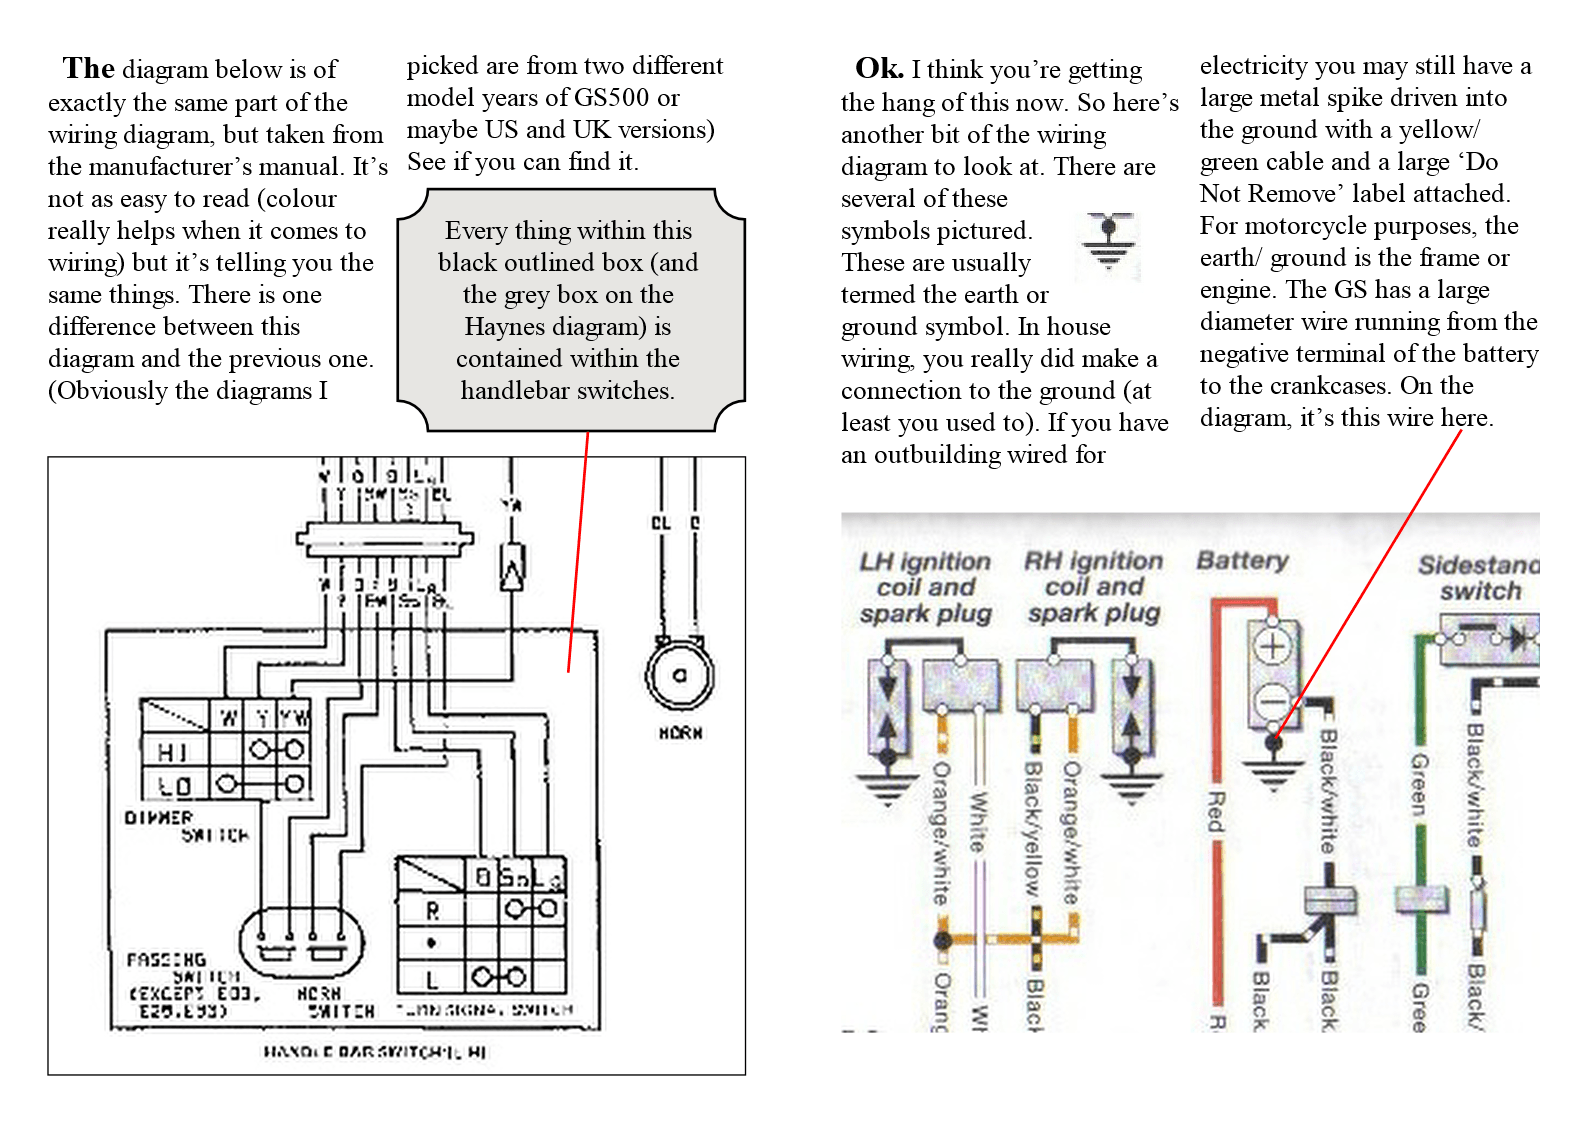 Reading motorcycle wiring diagrams